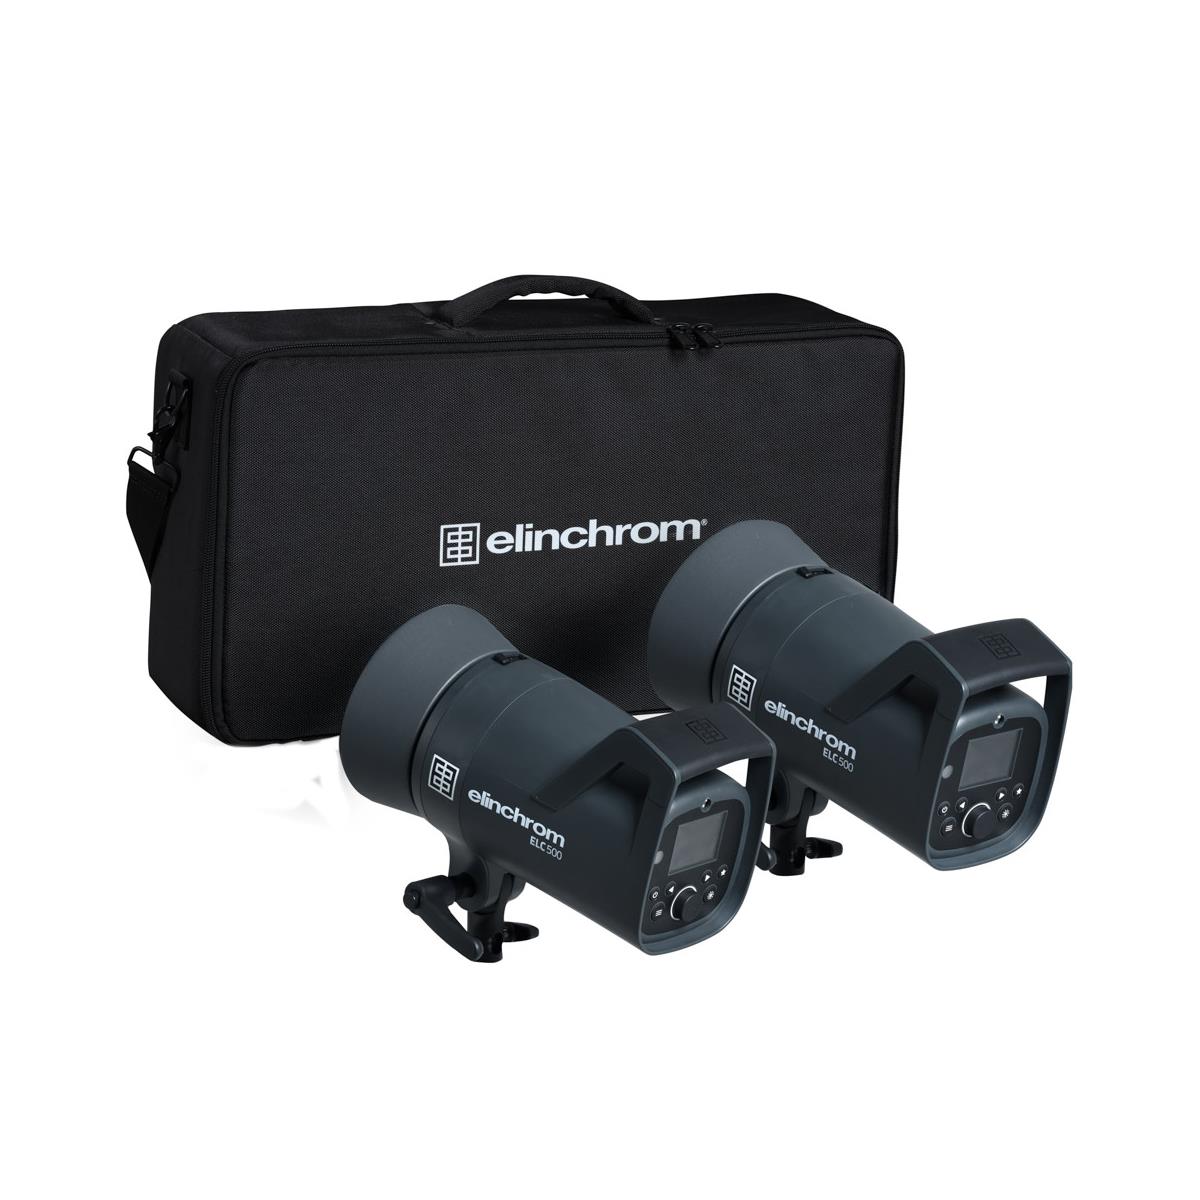 Image of Elinchrom ELC 500/500 Studio Monolight Dual Kit with Reflectors and Case